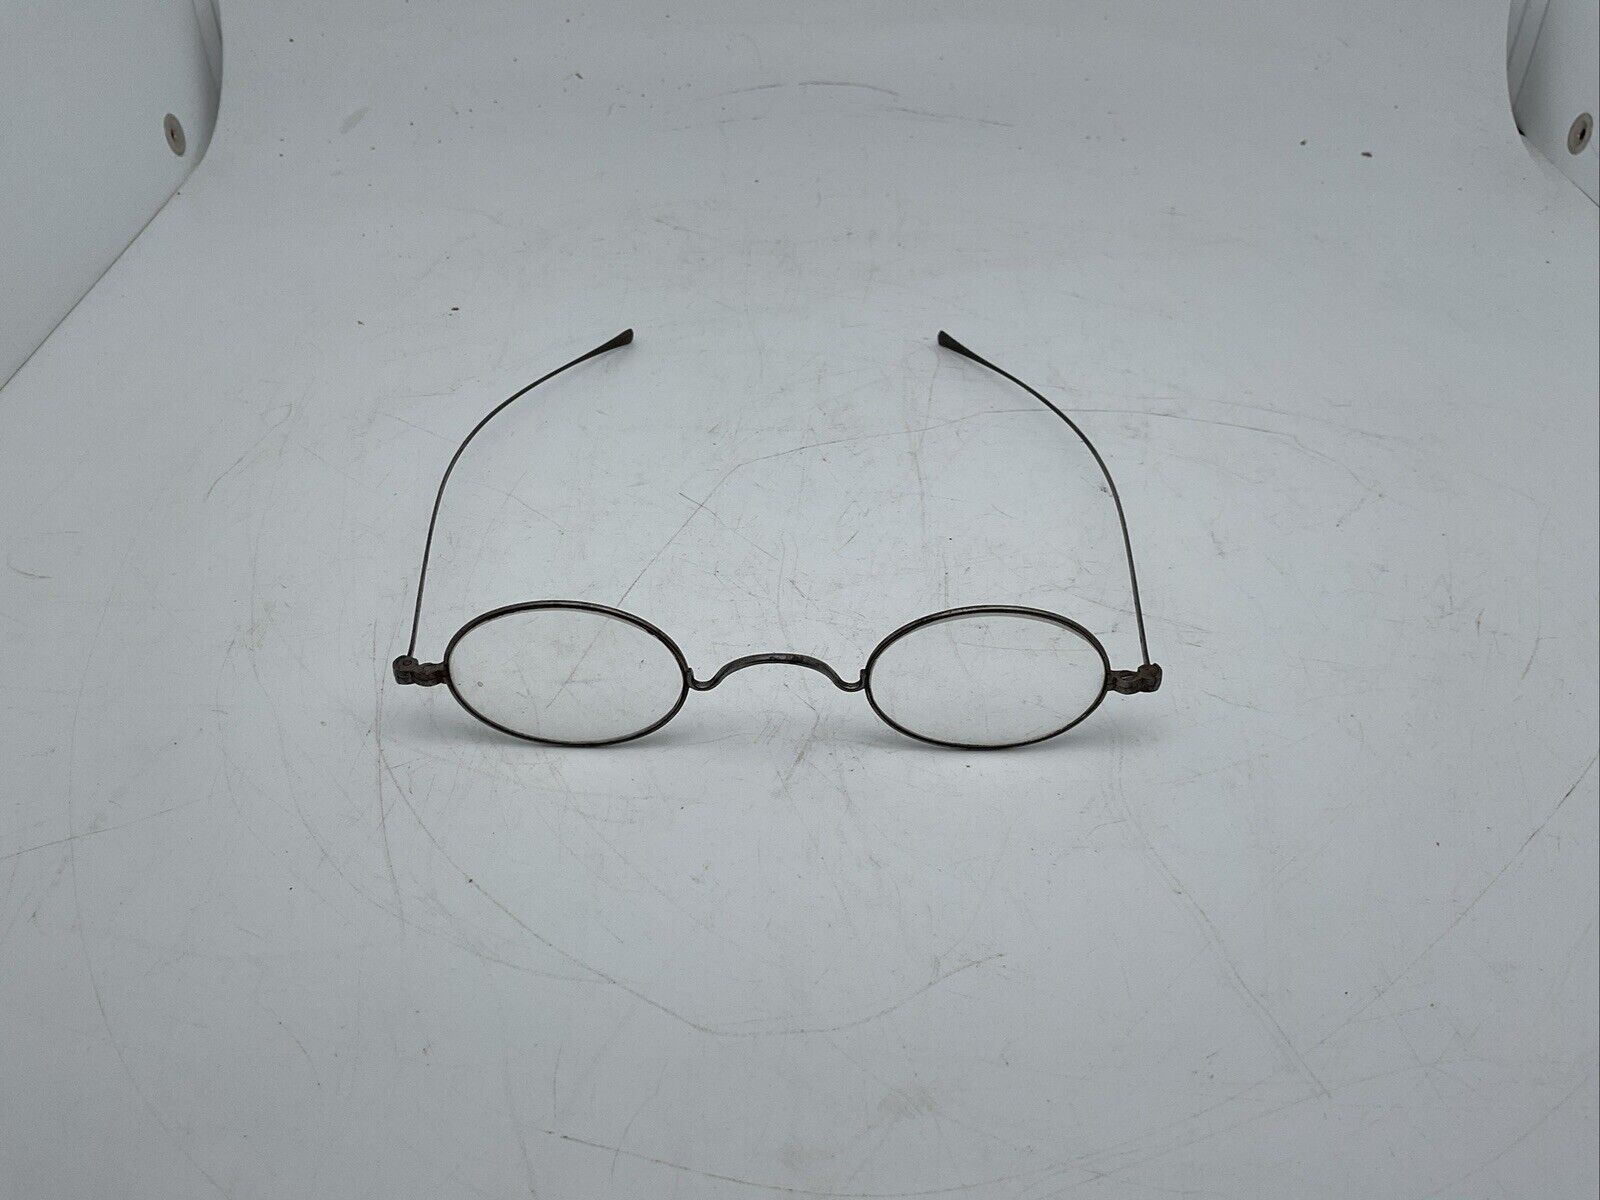 Antique 1800’s Oval eye glasses